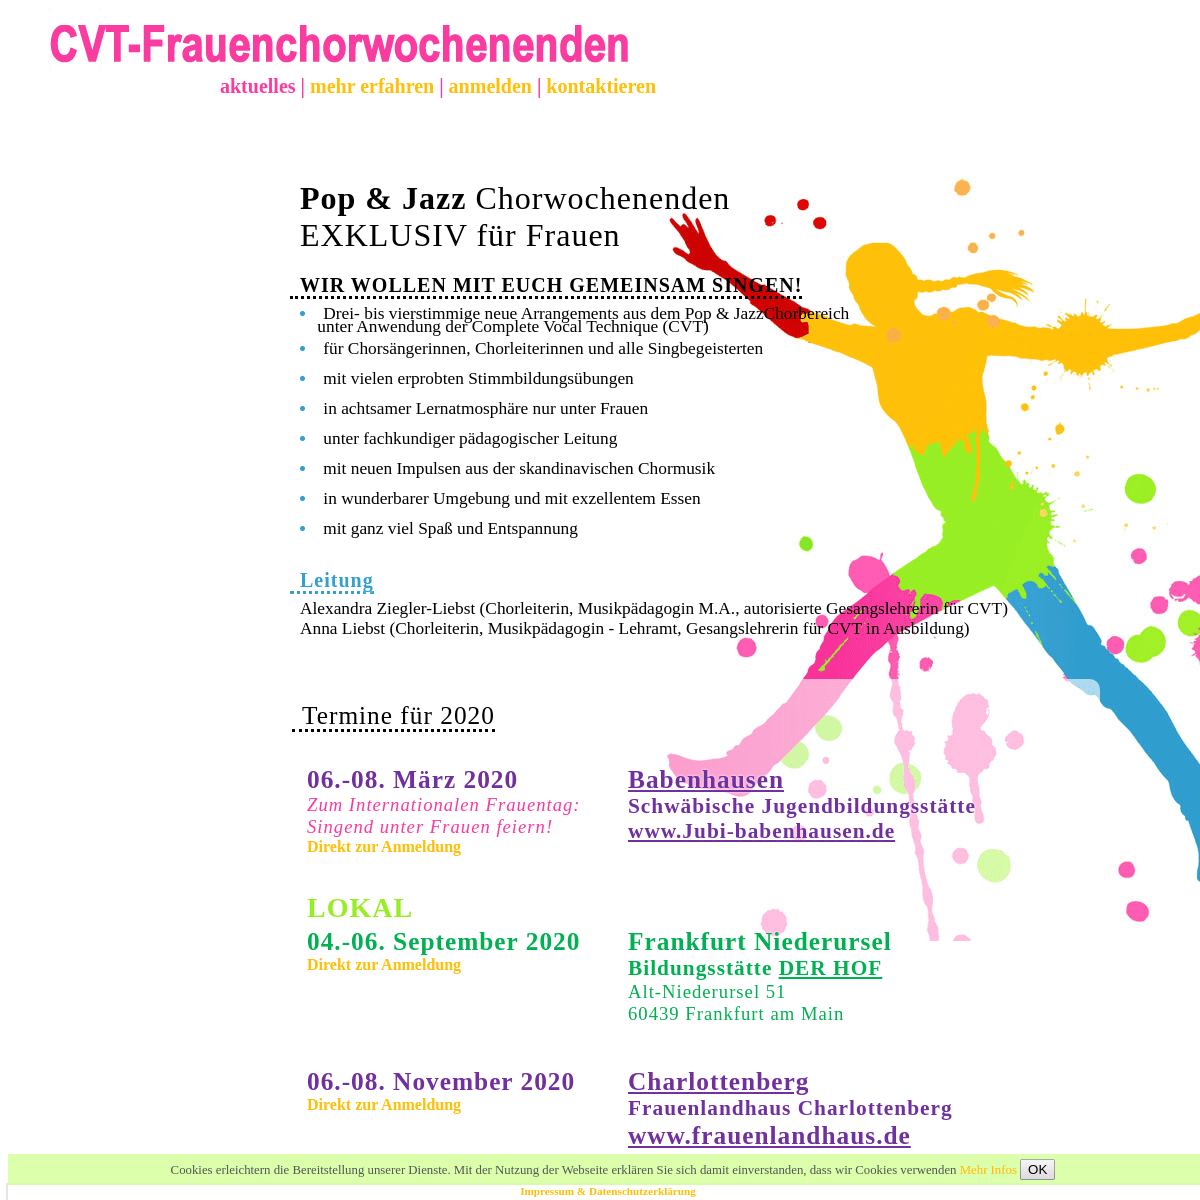 A complete backup of frauenchorwochenende.de